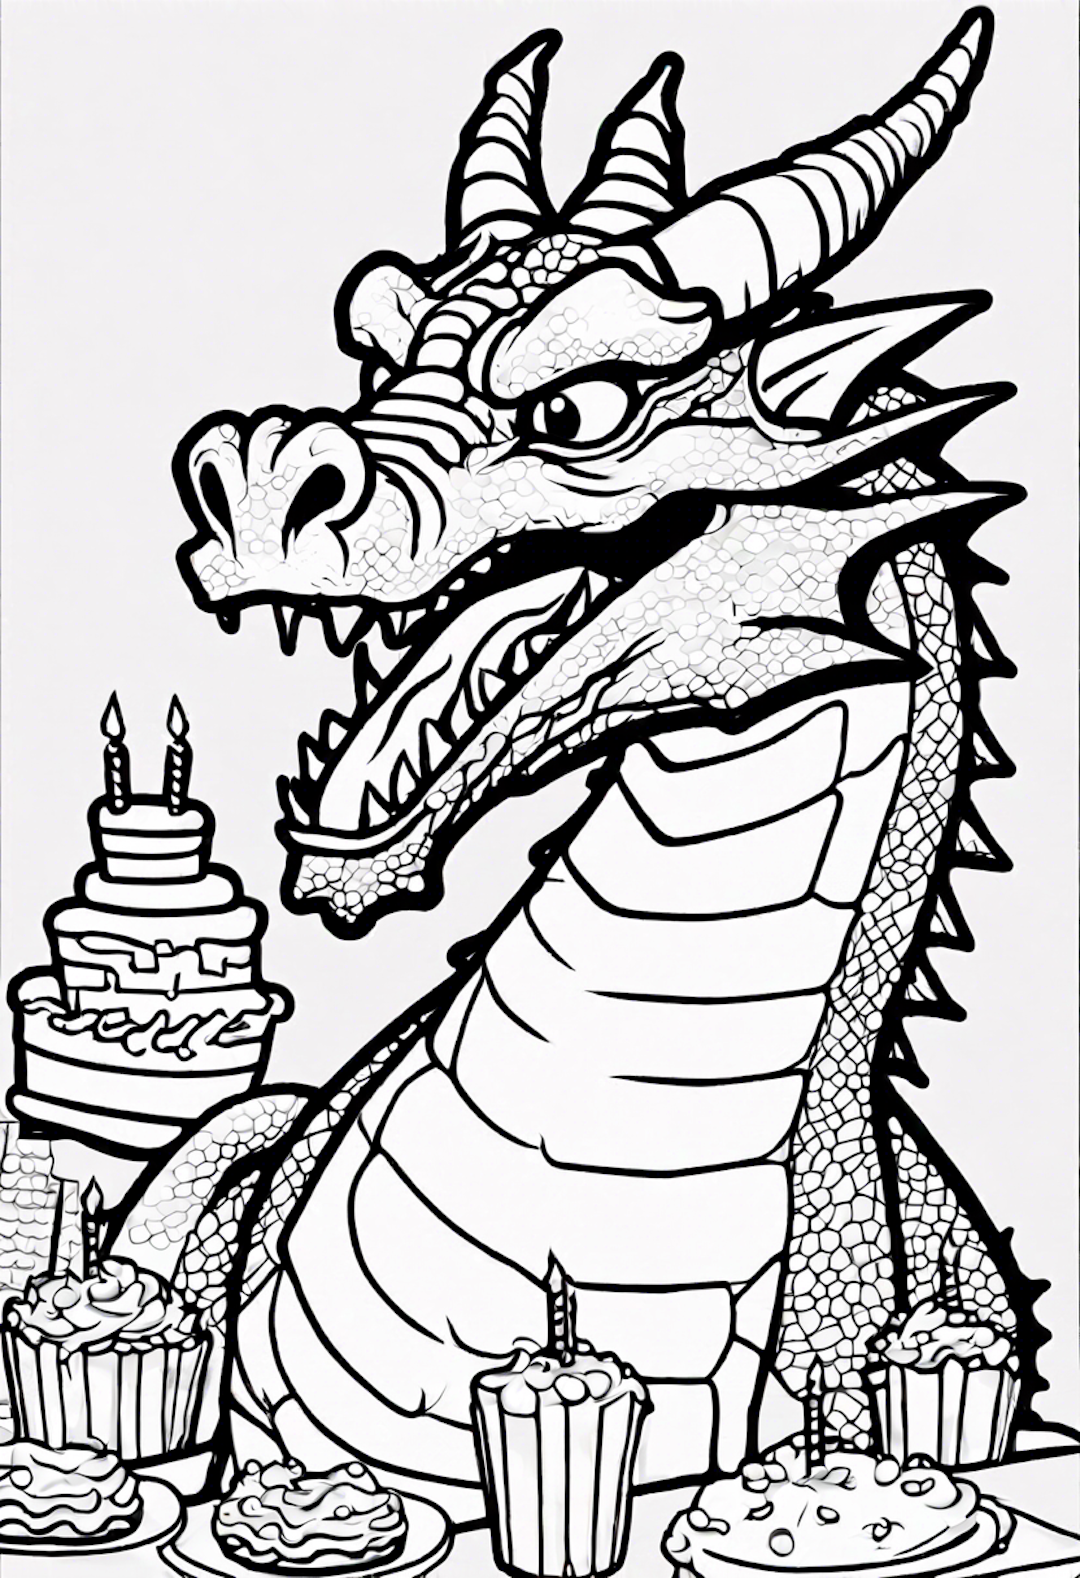 Dragon Celebrating A Birthday Party